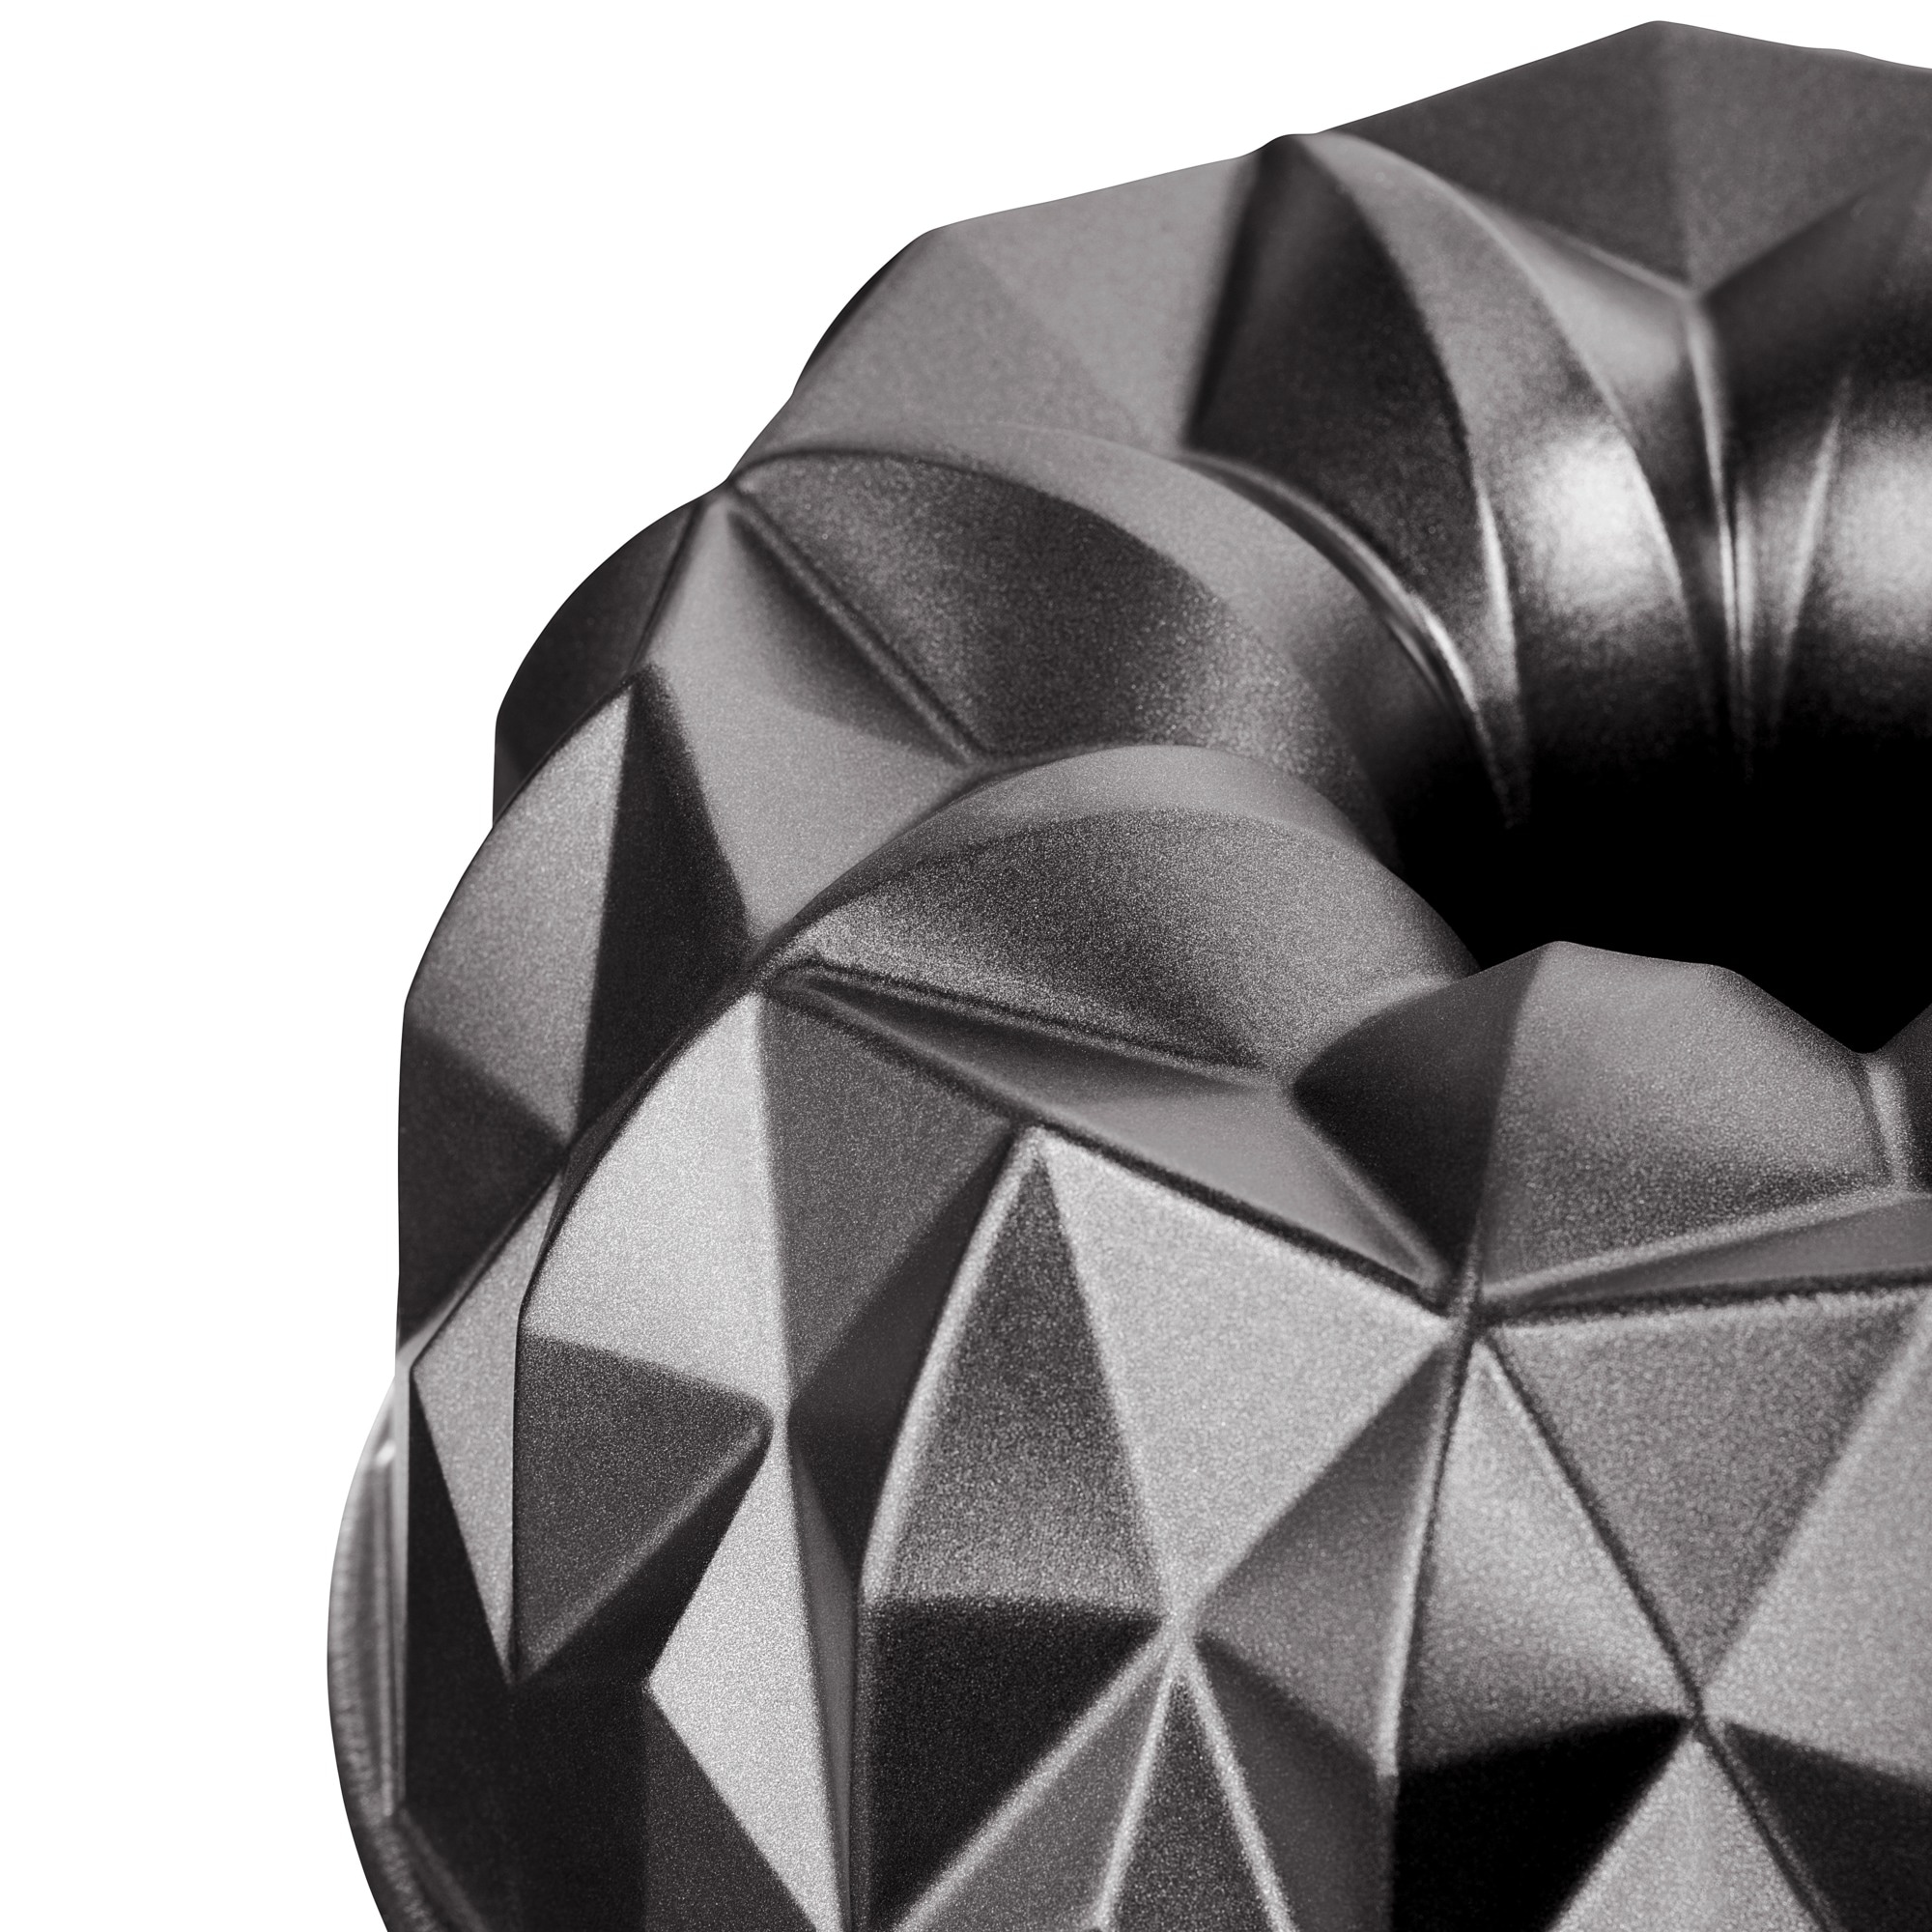 Kaiser Backformen Backform »Inspiration«, Mit geometrischer Oberflächenstruktur